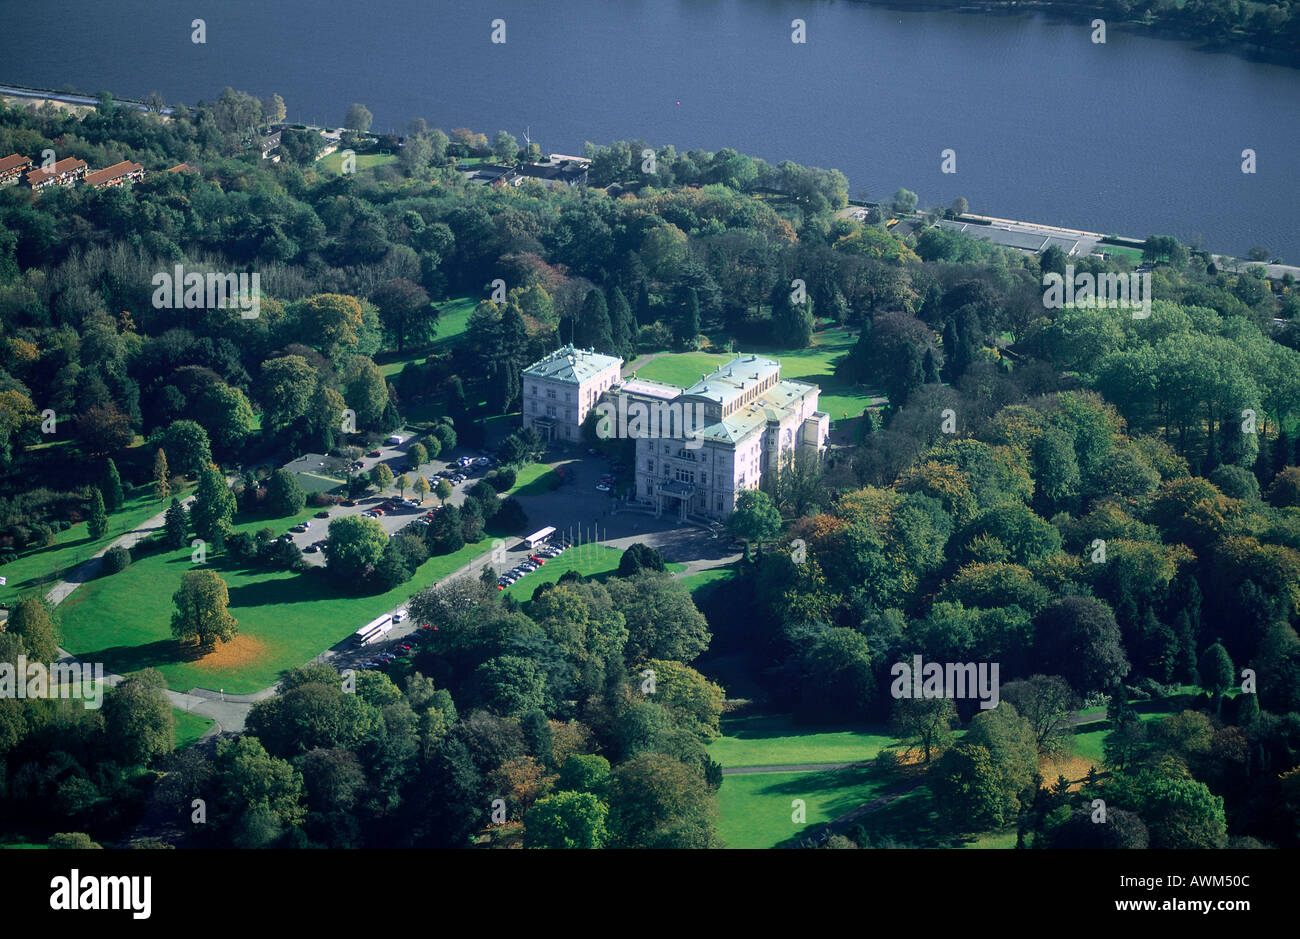 Aerial view of villa at lakeside, Villa Krupp, Baldeneysee, Essen, North Rhine-Westphalia, Germany Stock Photo